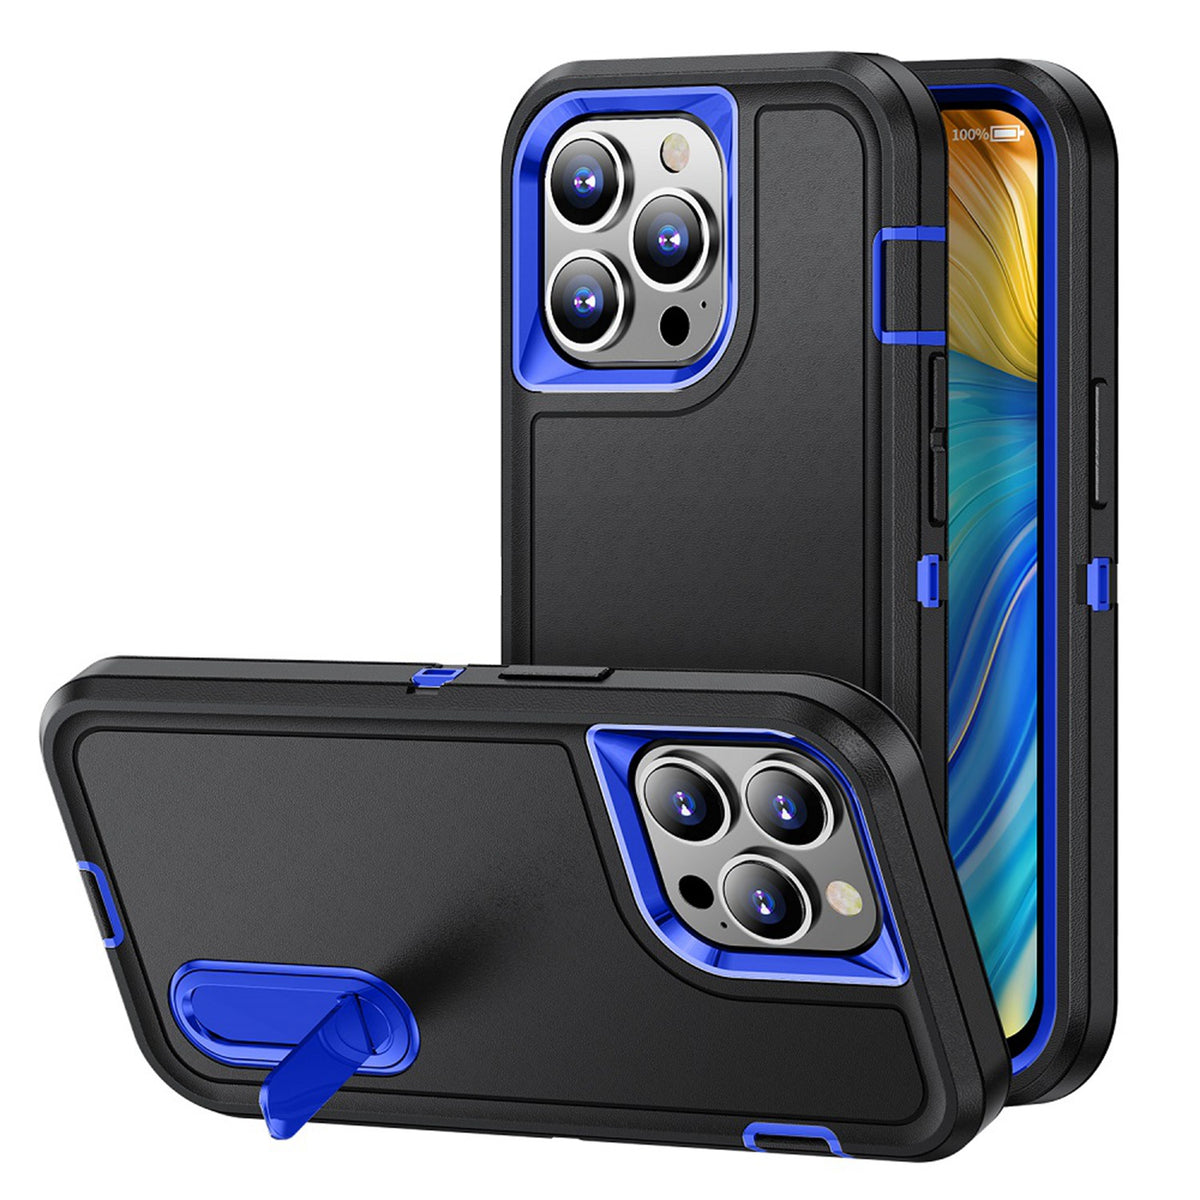 Iphone 7 / 8 / SE Tough Kickstand Case Black Blue